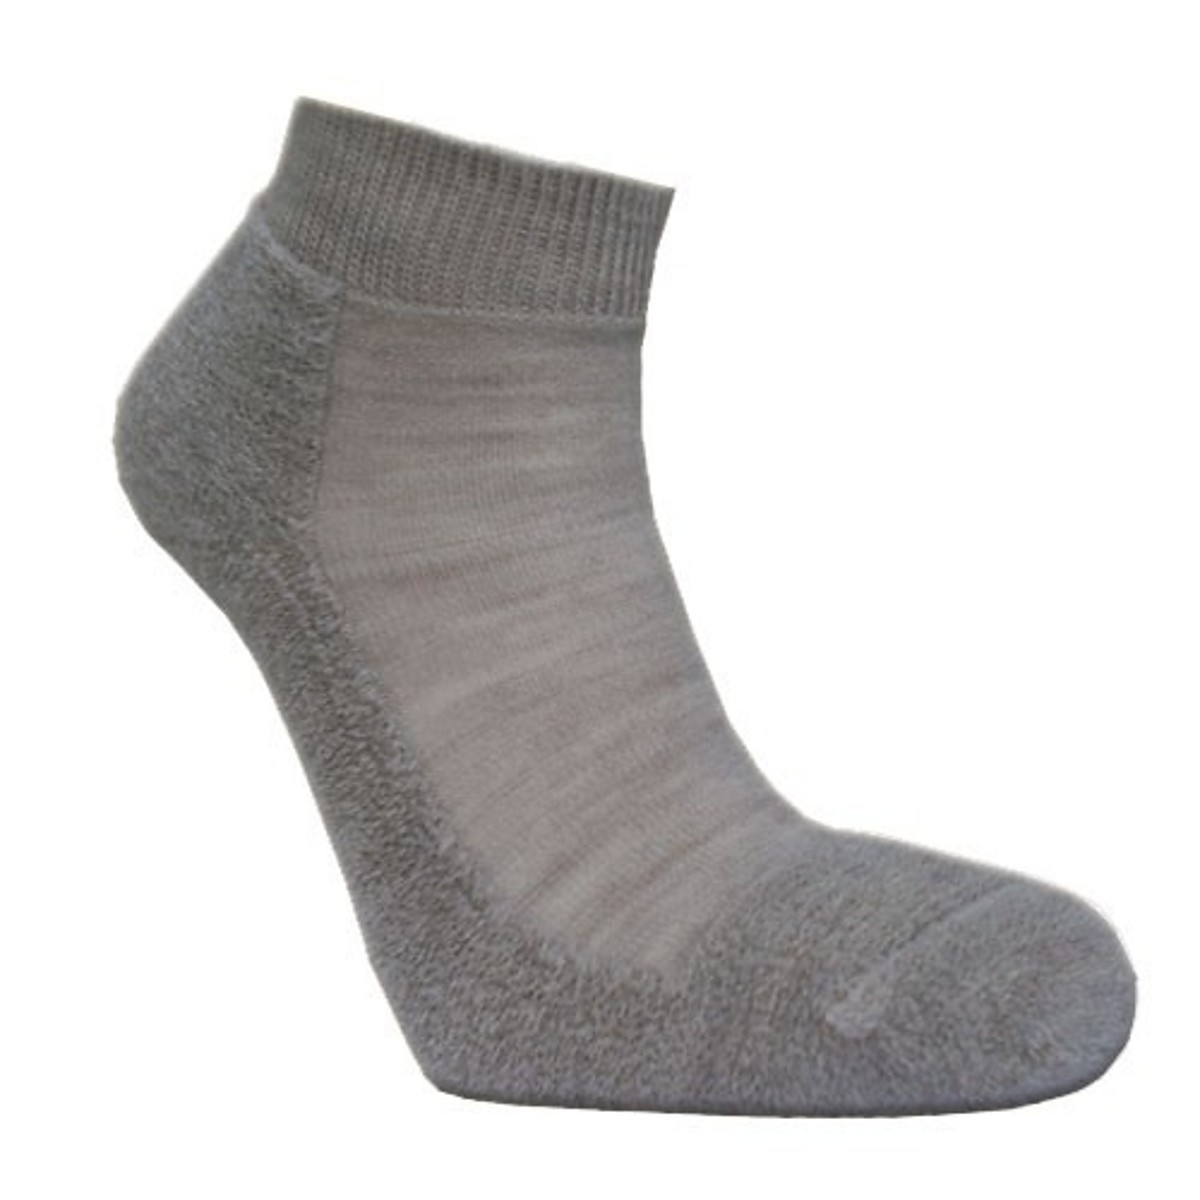 Veith outdoor socks ankle-length